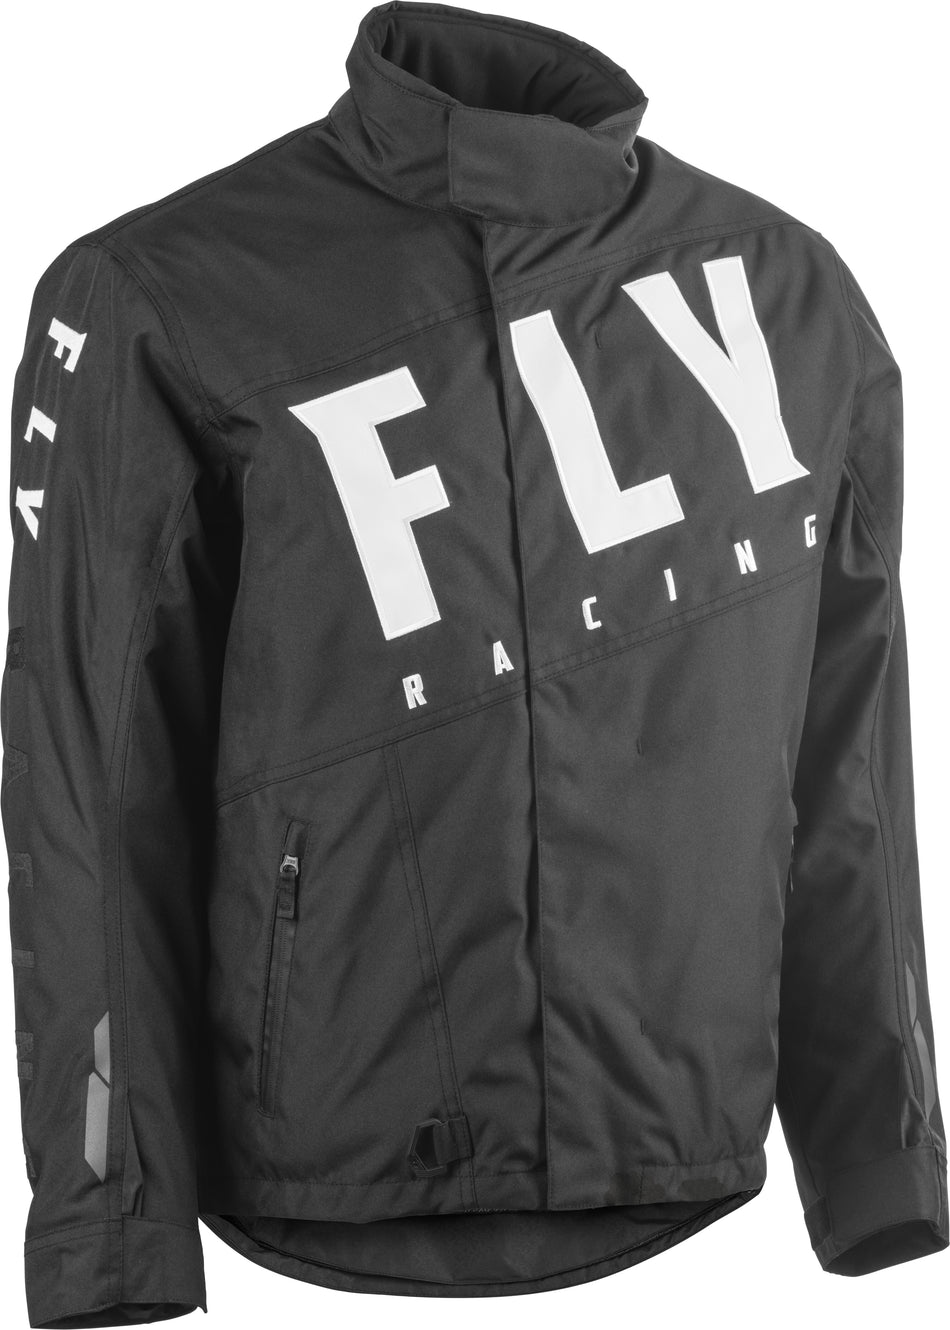 FLY RACING Fly Snx Pro Jacket Black Ym 470-4110YM